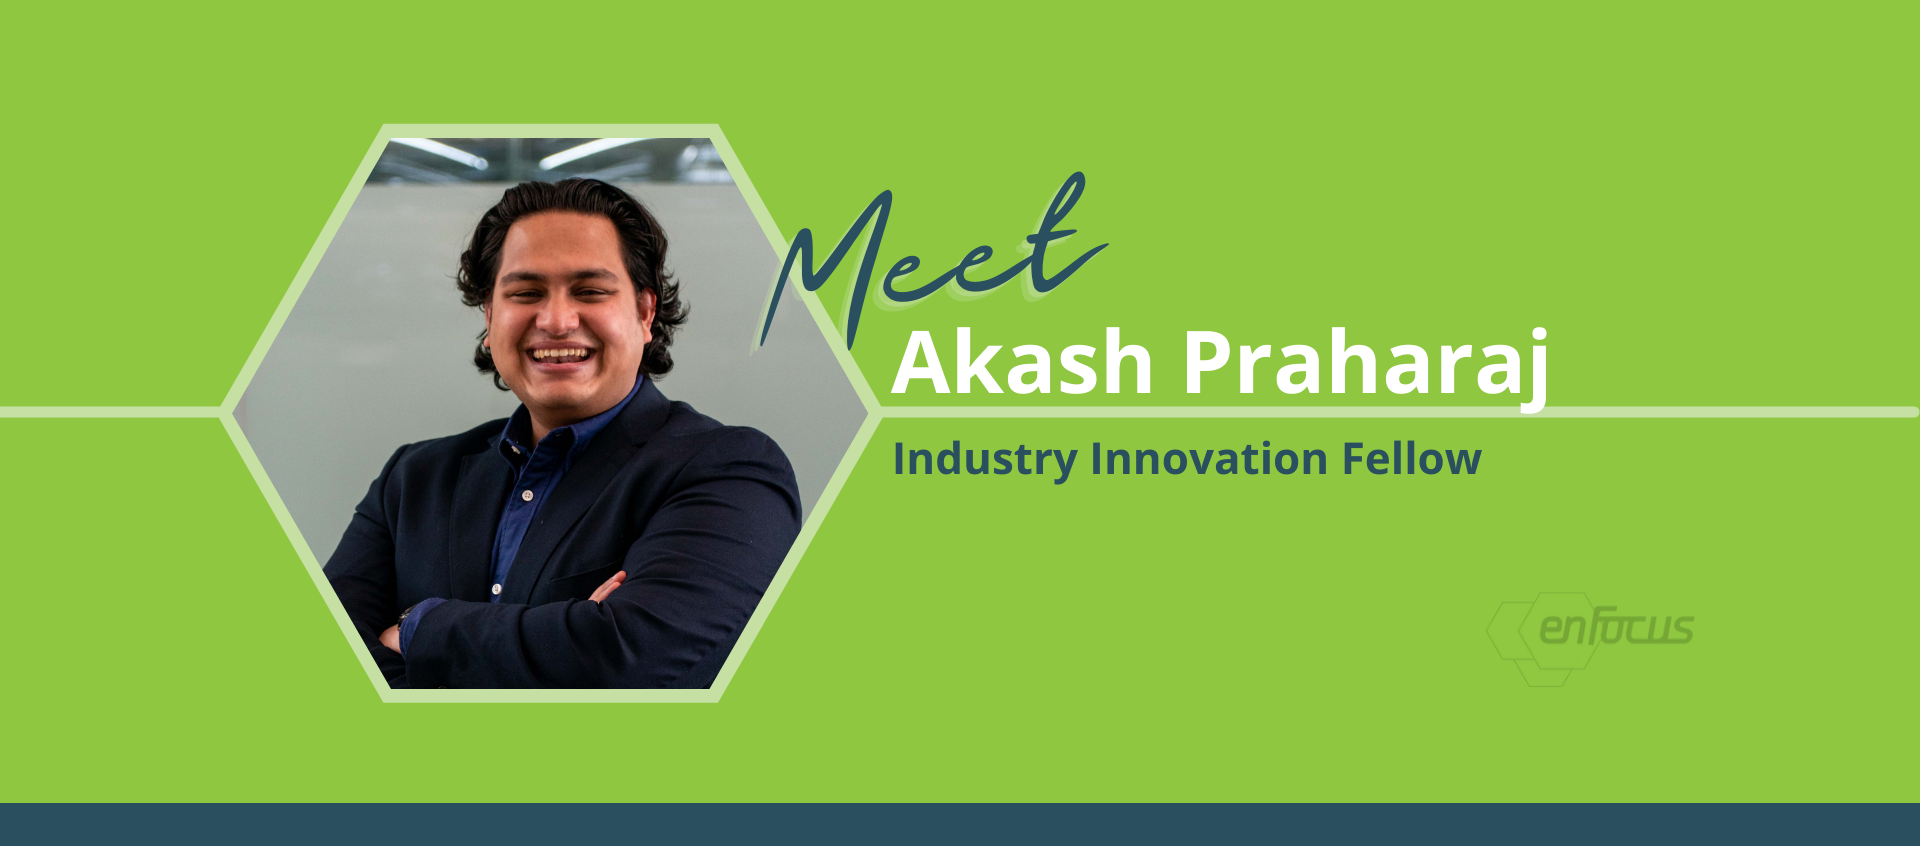 Akash Applies Engineering Skills Toward Sustainable Development